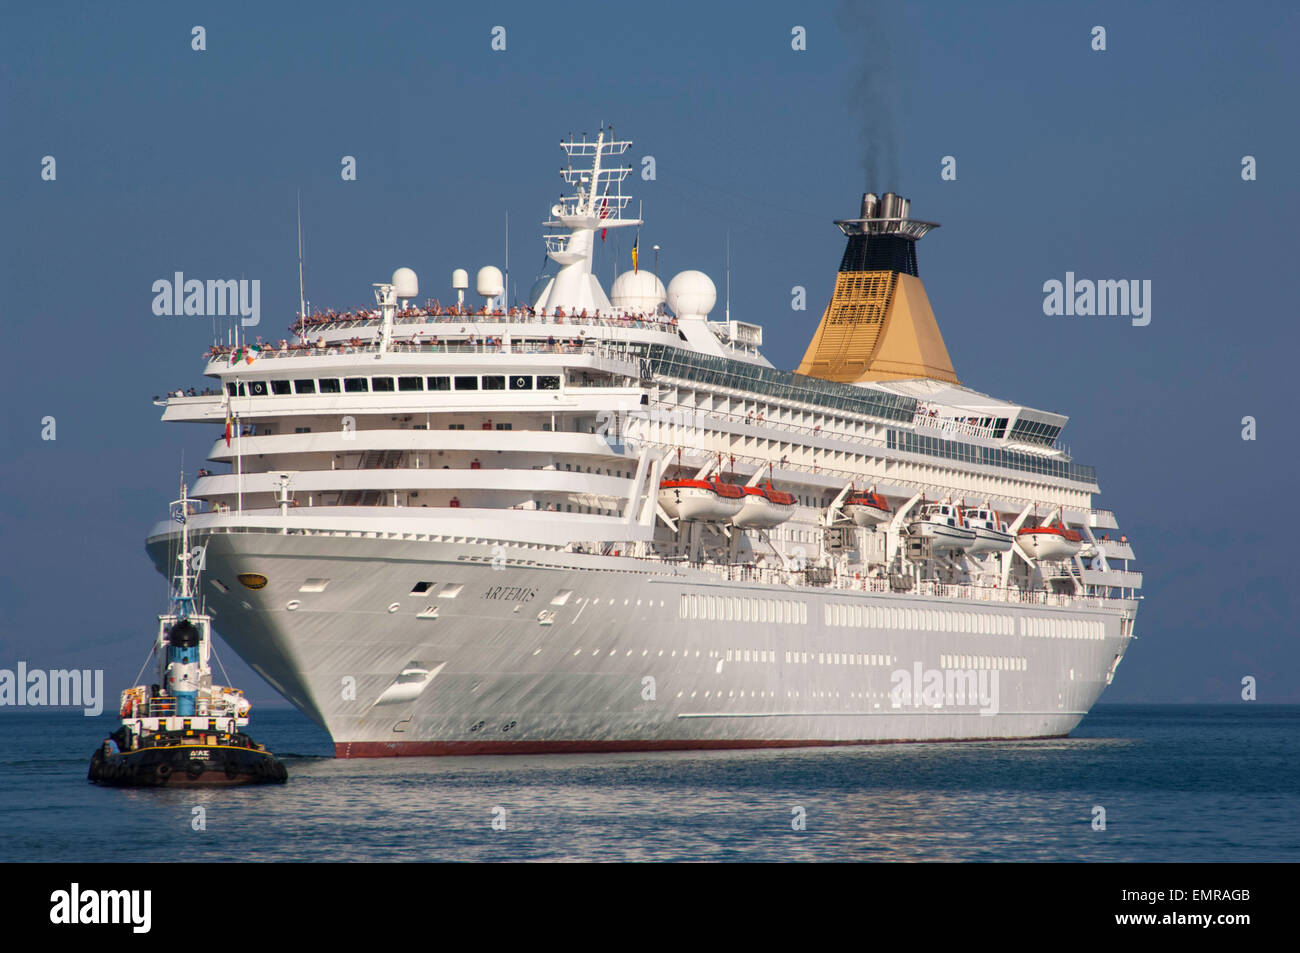 CORFU/GREECE 3RD OCTOBER 2006 - Cruise Ship Artemis entering port in Mediterranean region Stock Photo